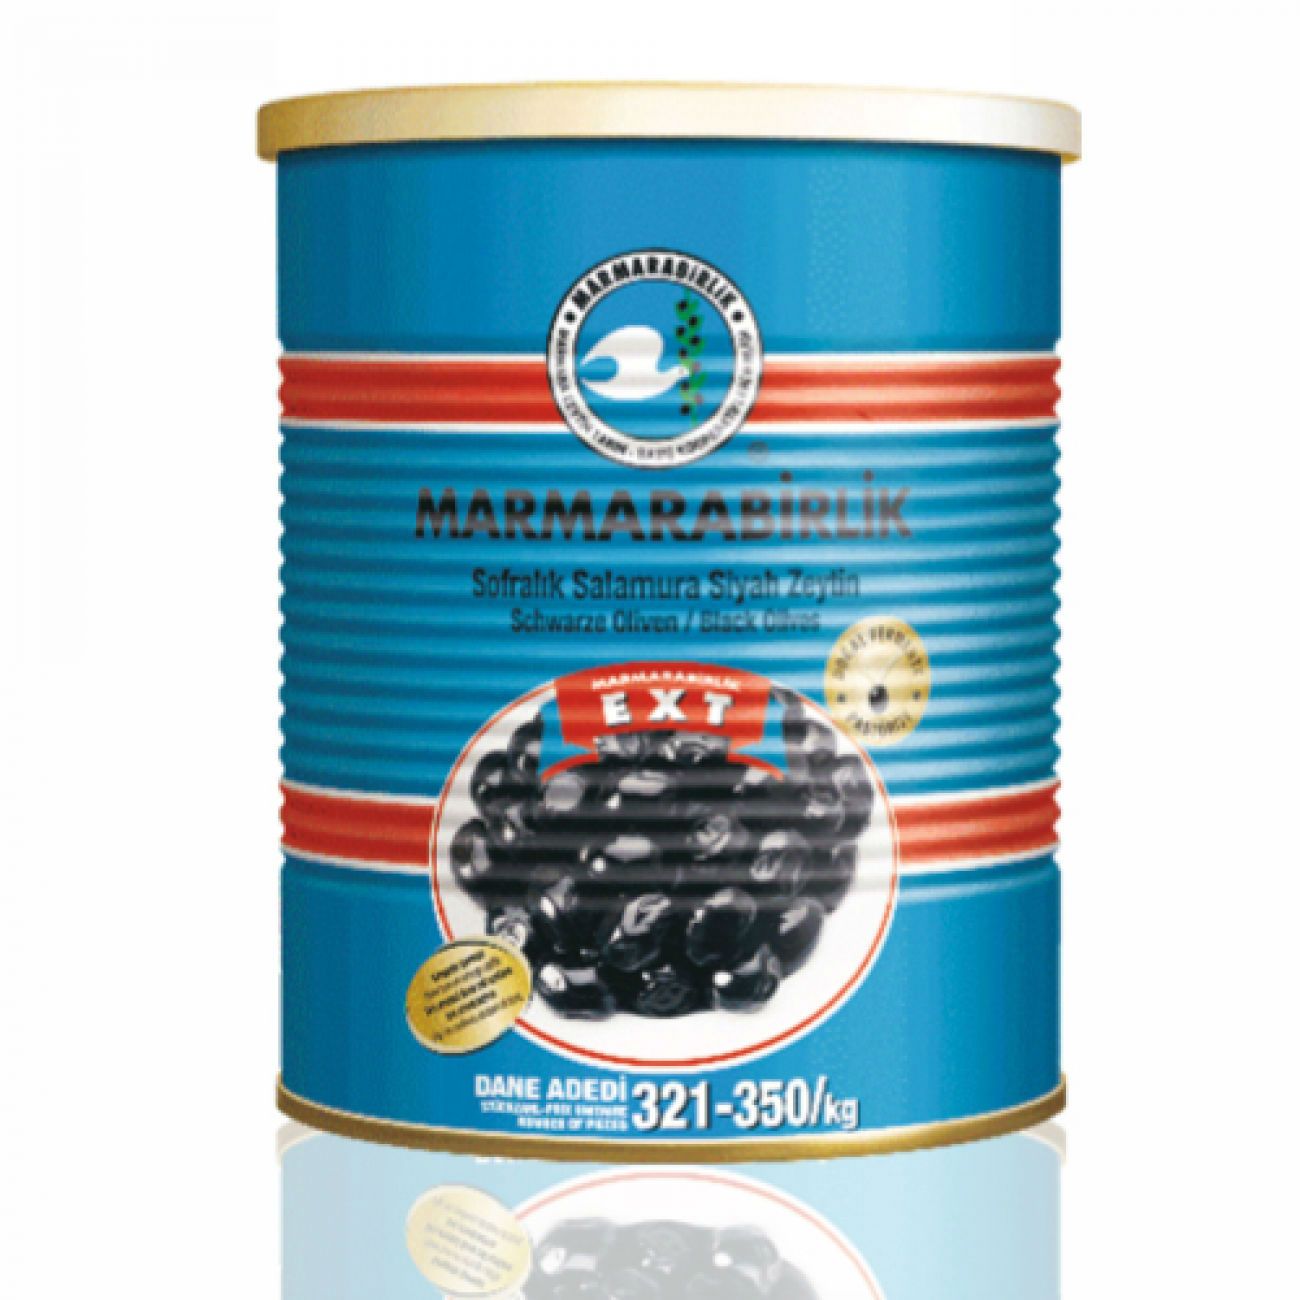 Marmara Birlik Gemlik Extra Olives (400G) - Aytac Foods